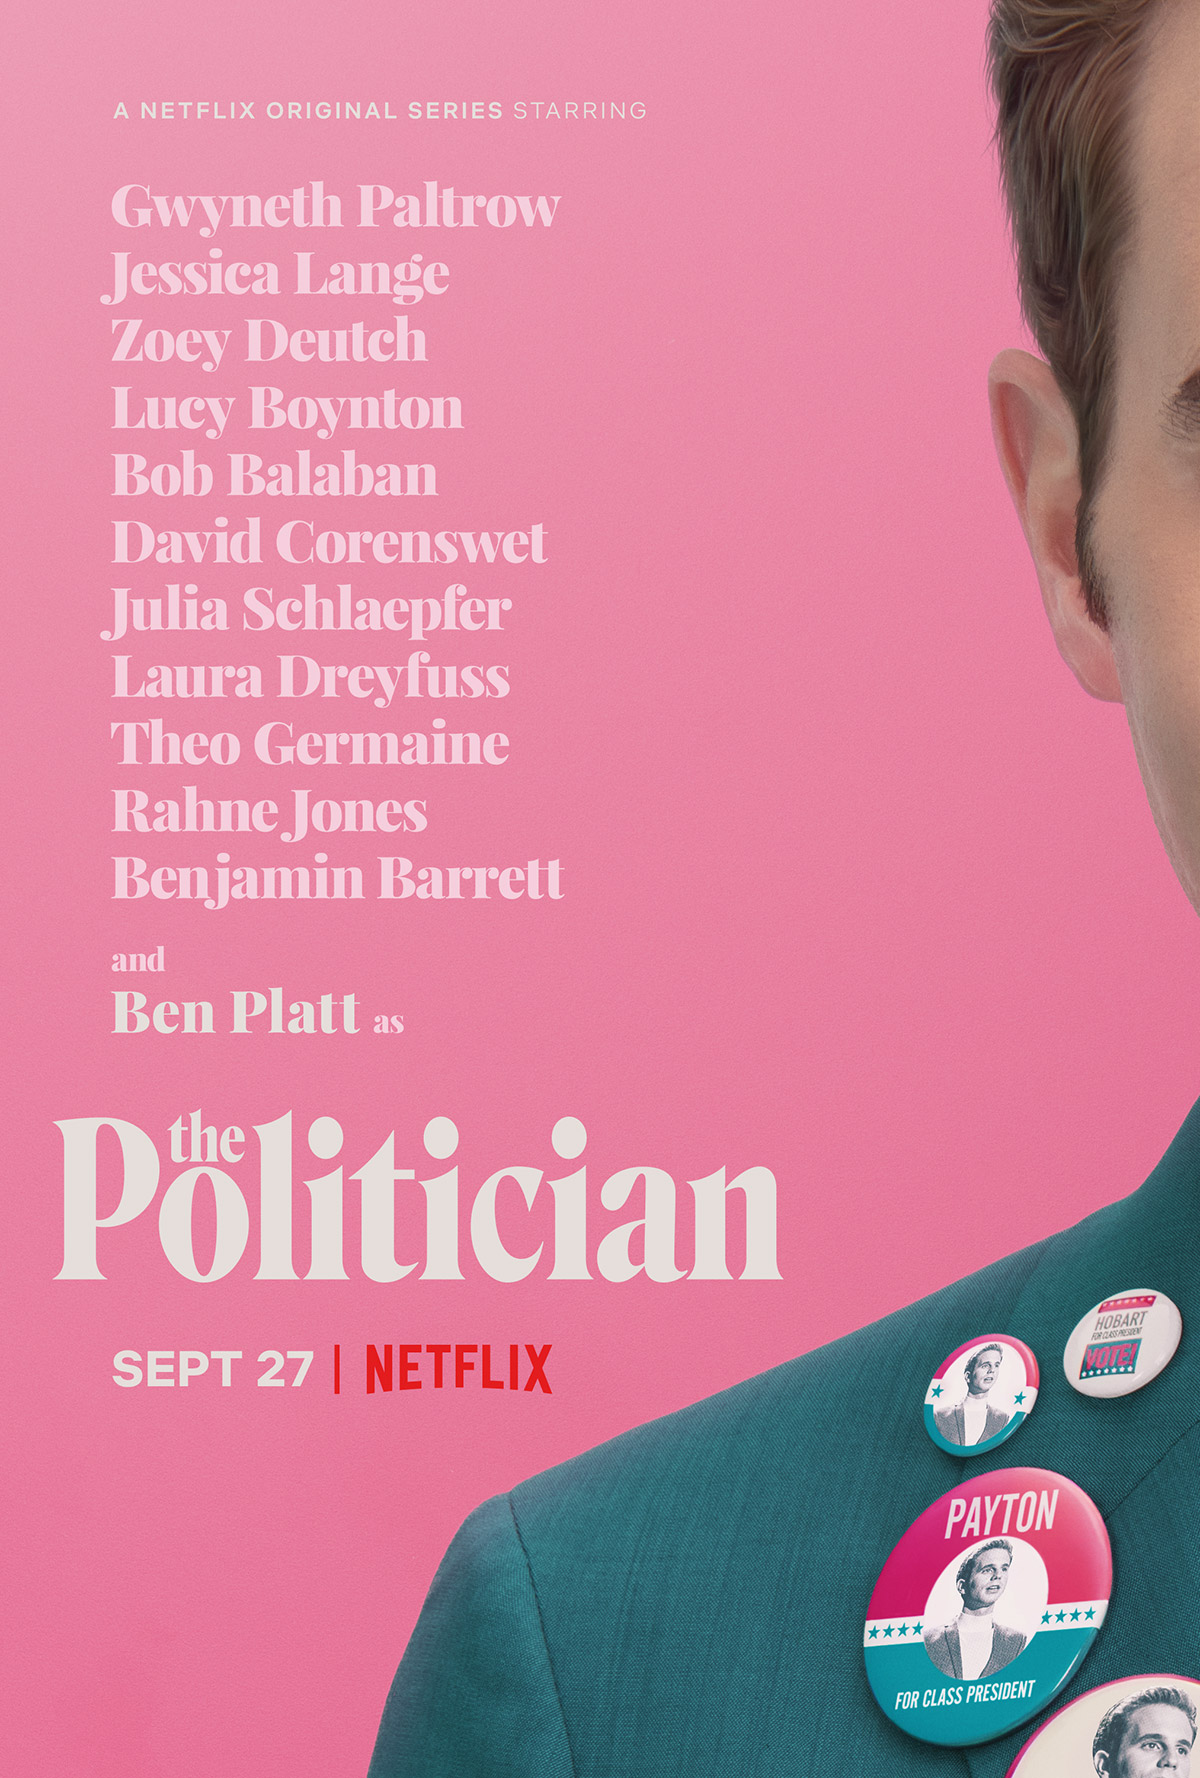 Netflix's The Politician